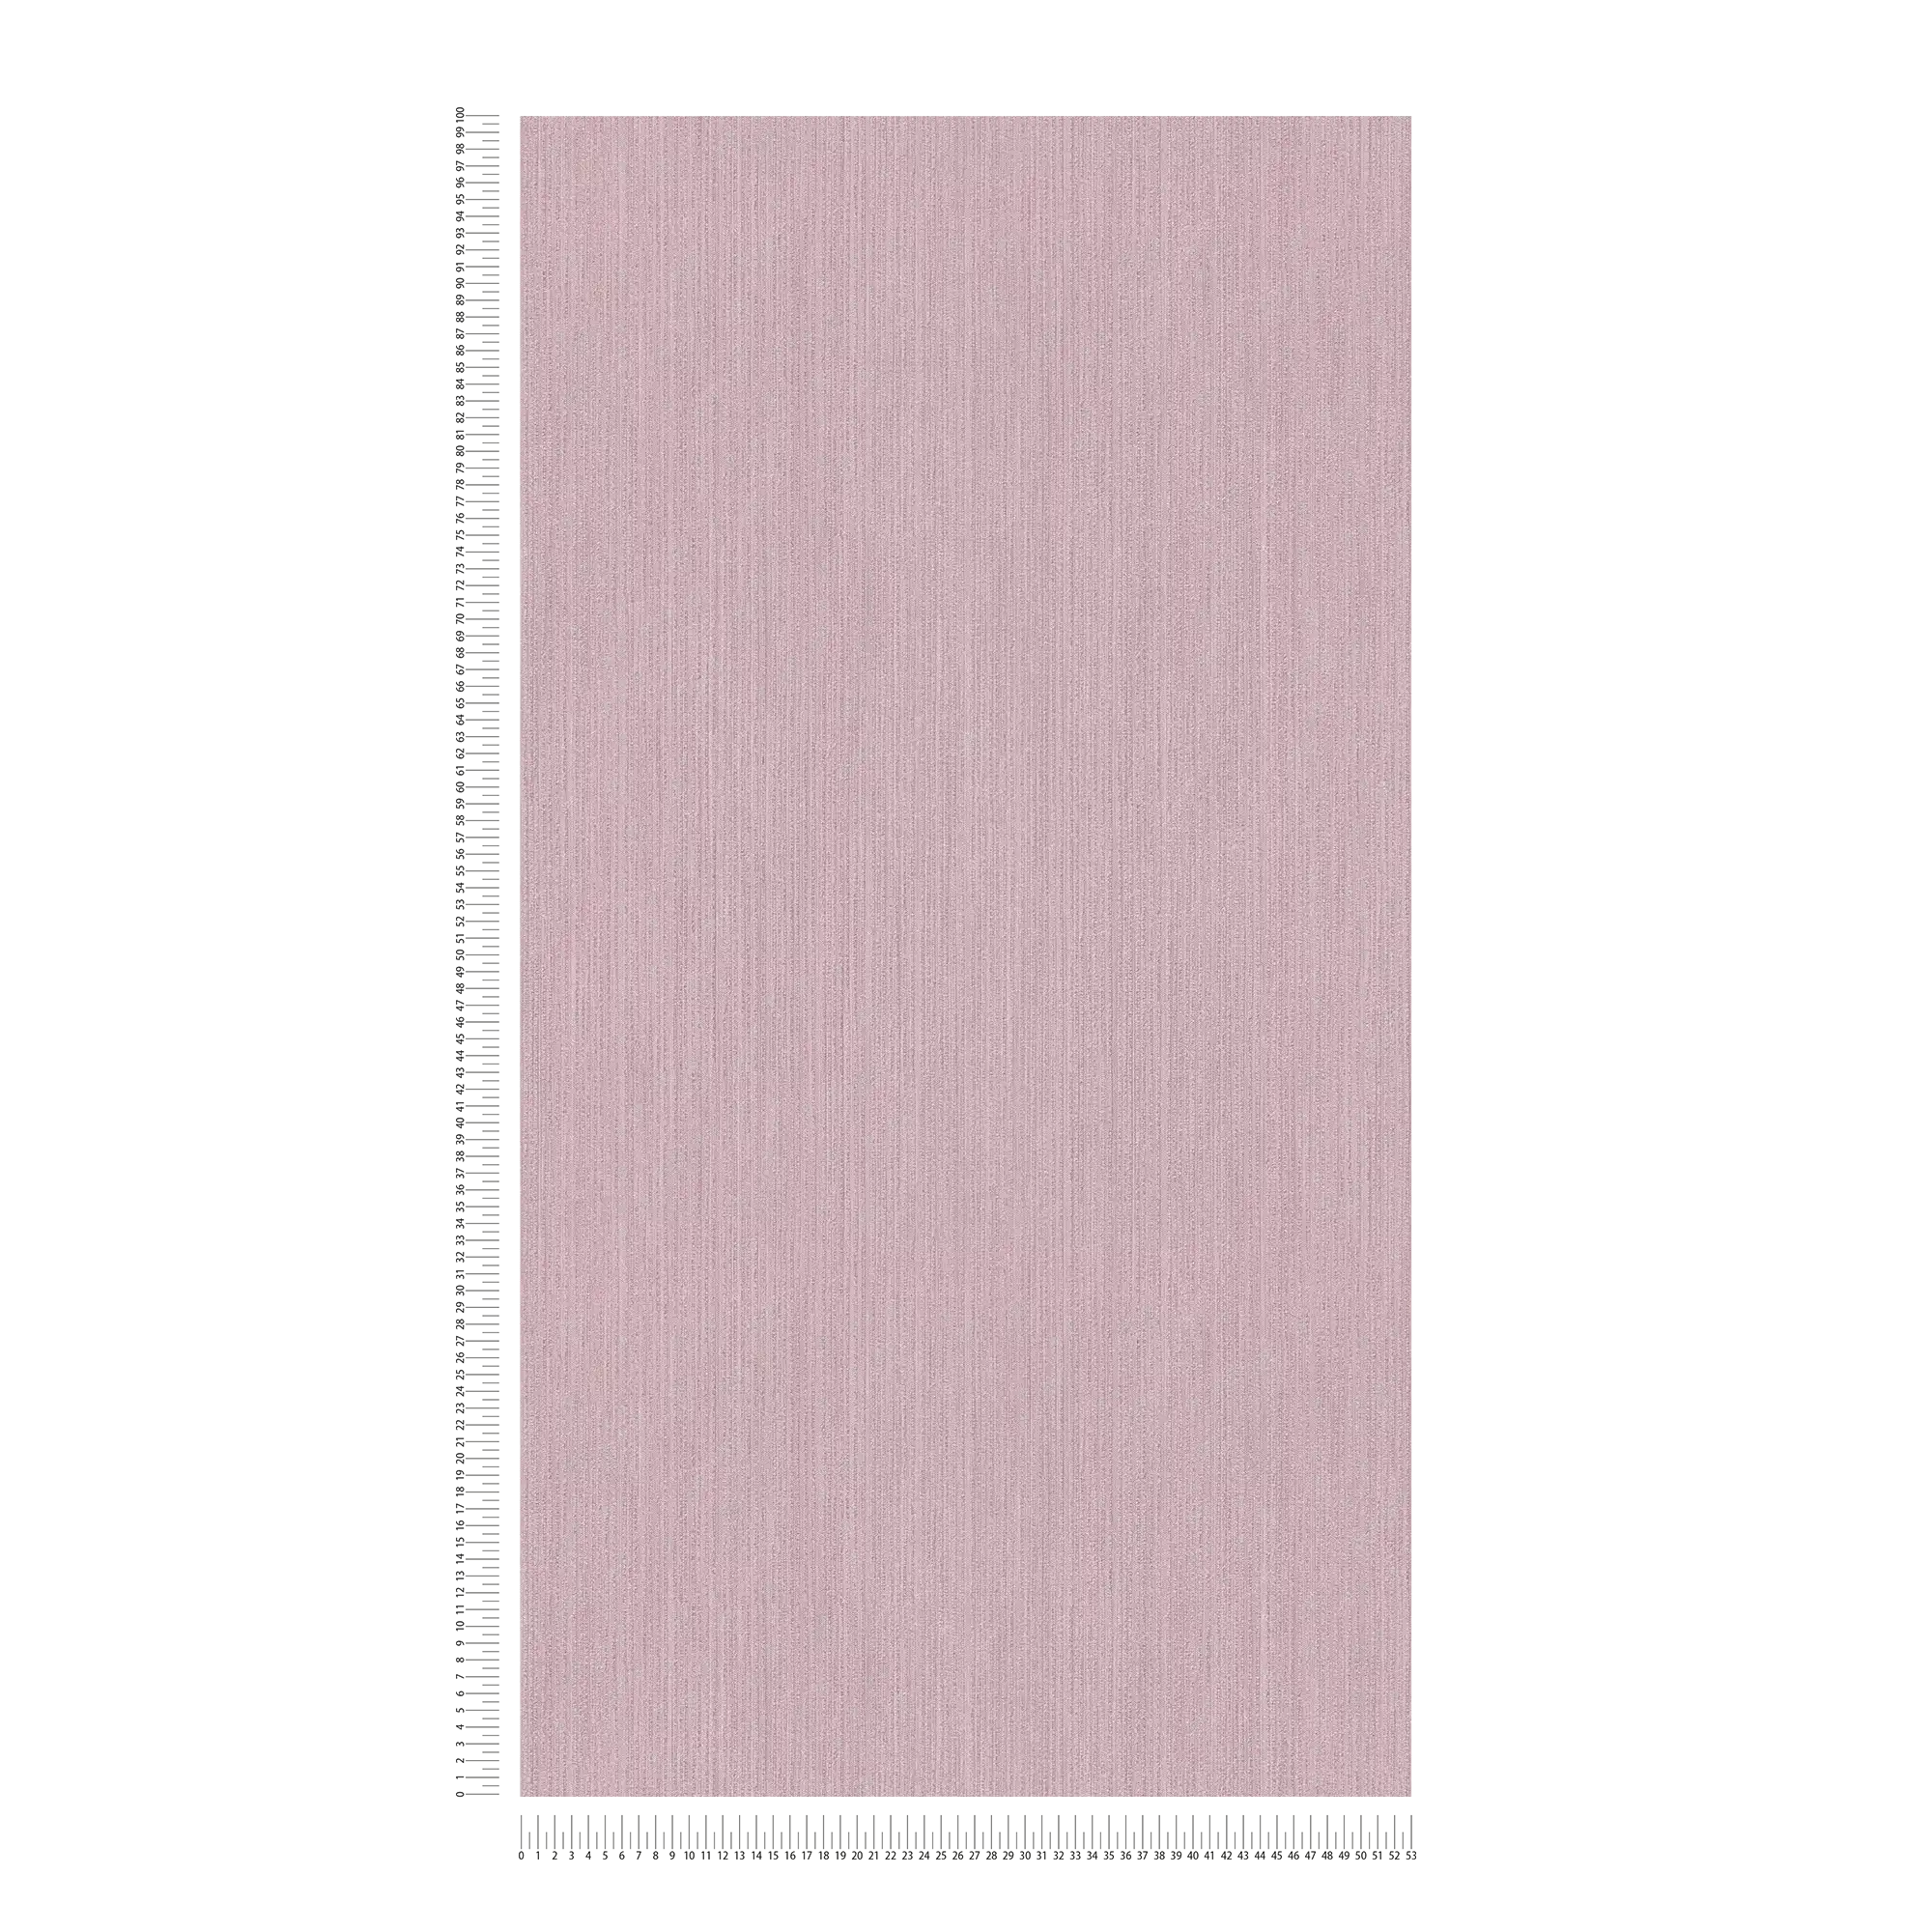             wallpaper MICHALSKY lined textured pattern - purple, pink
        